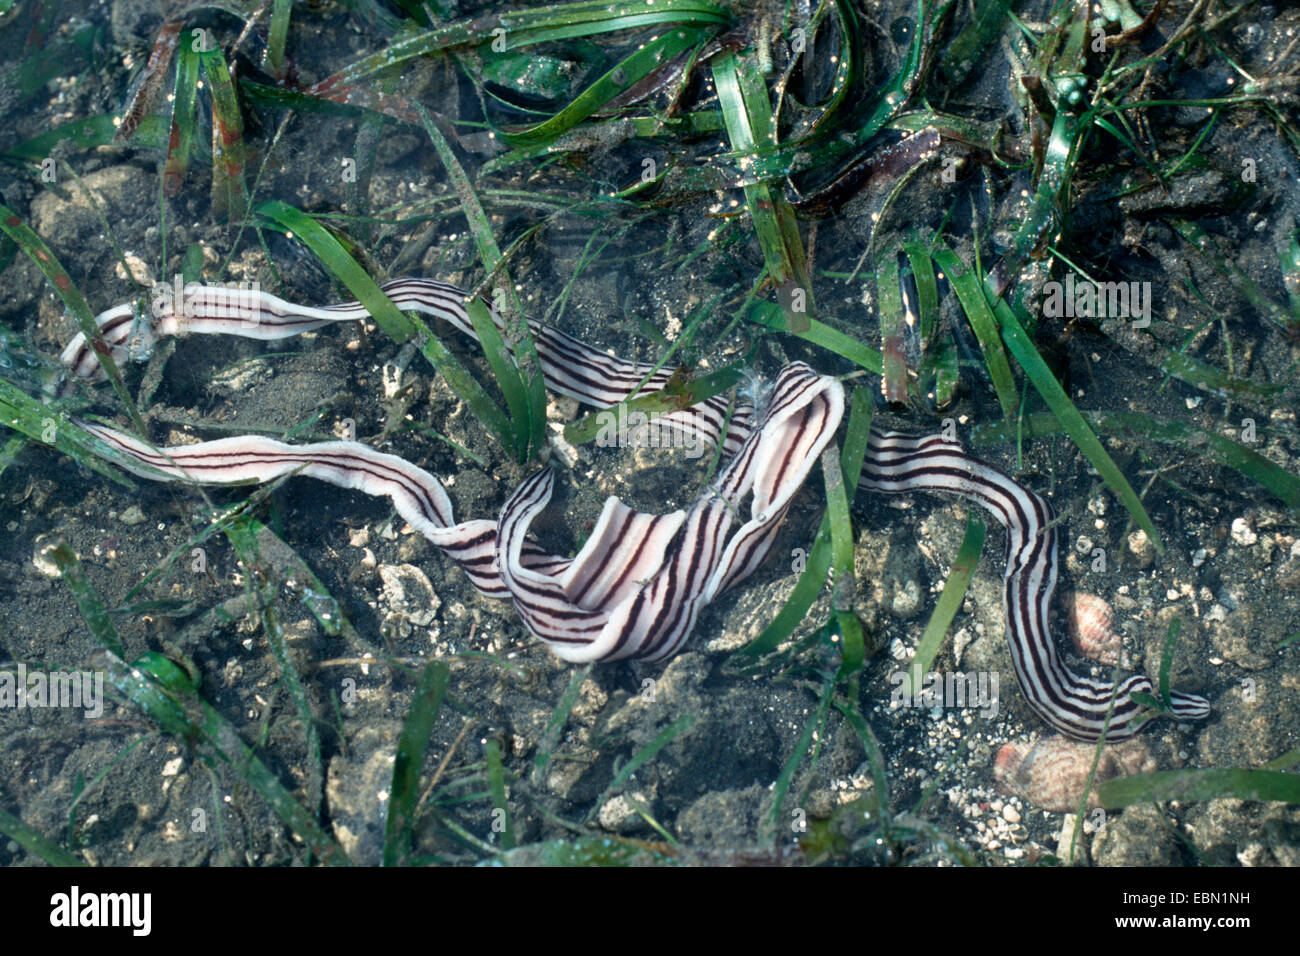 nemertines, nemerteans, proboscis worms, rhynchocoelans, ribbon worms(broad/flat), bootlace worms(long) (Nemertini, Nemertea, Rhynchocoela), lying in sea ooze, Indonesia, Bali Stock Photo